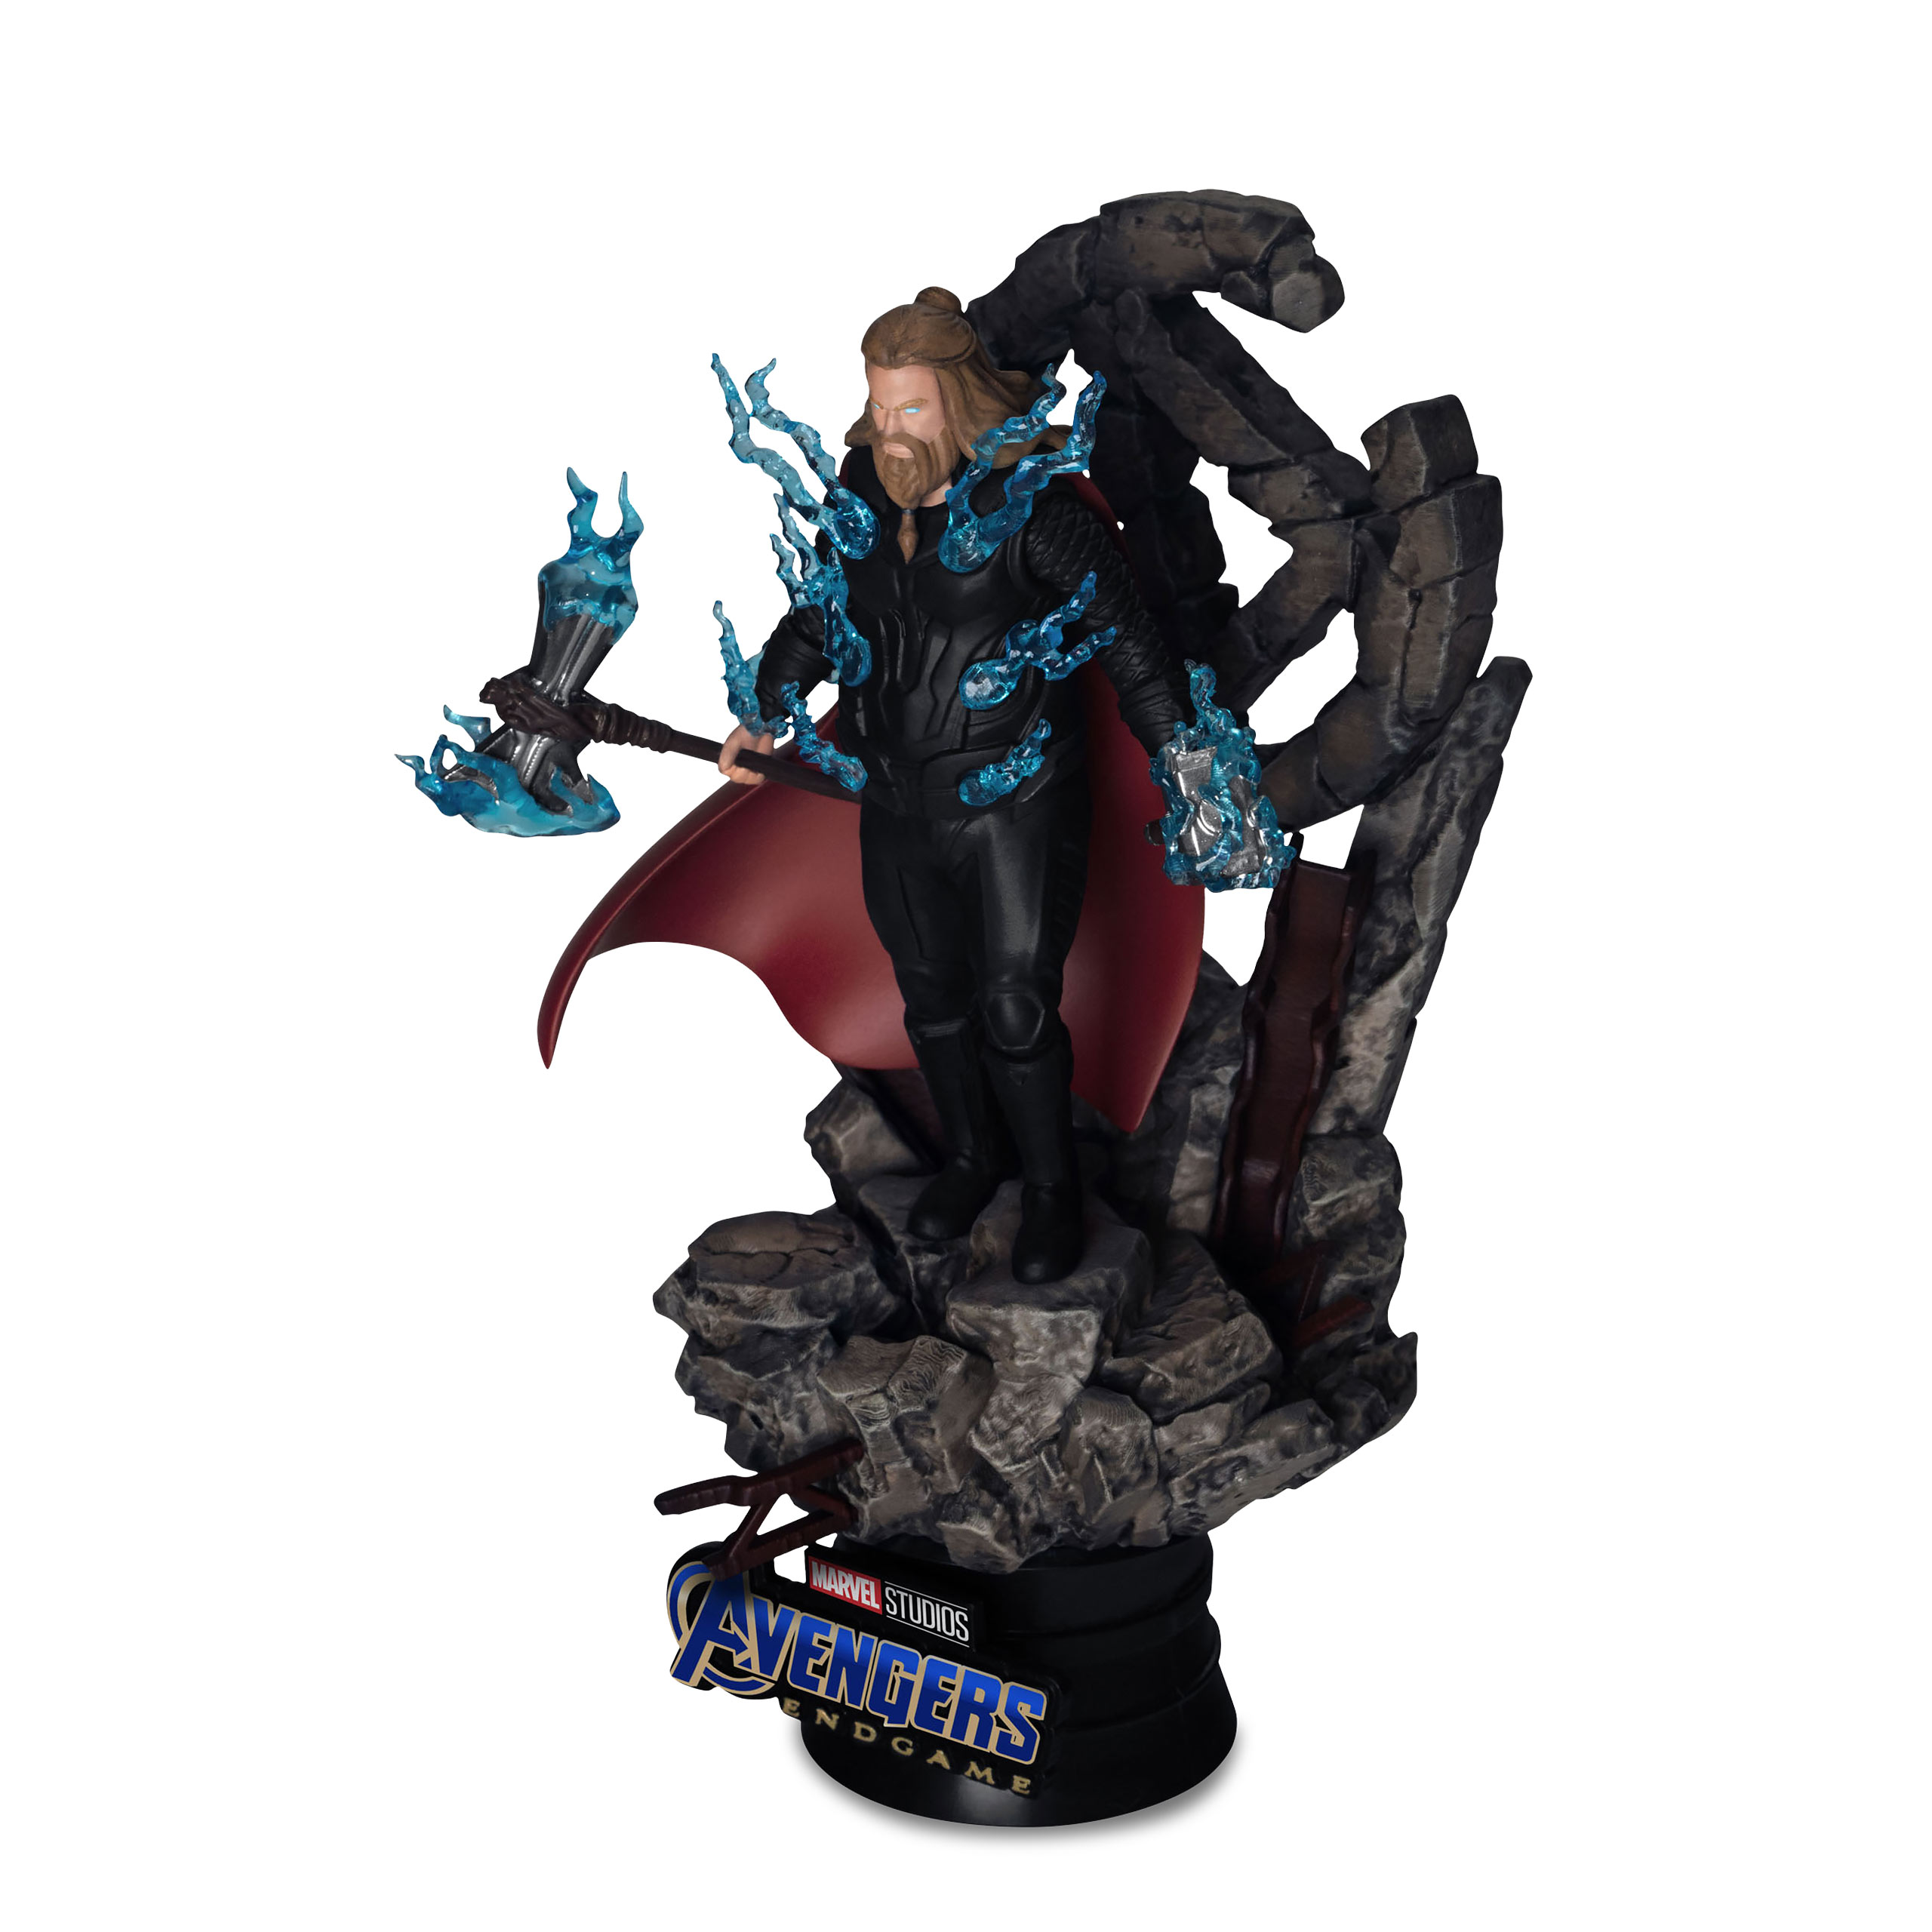 Avengers Endgame - Thor figurine diorama